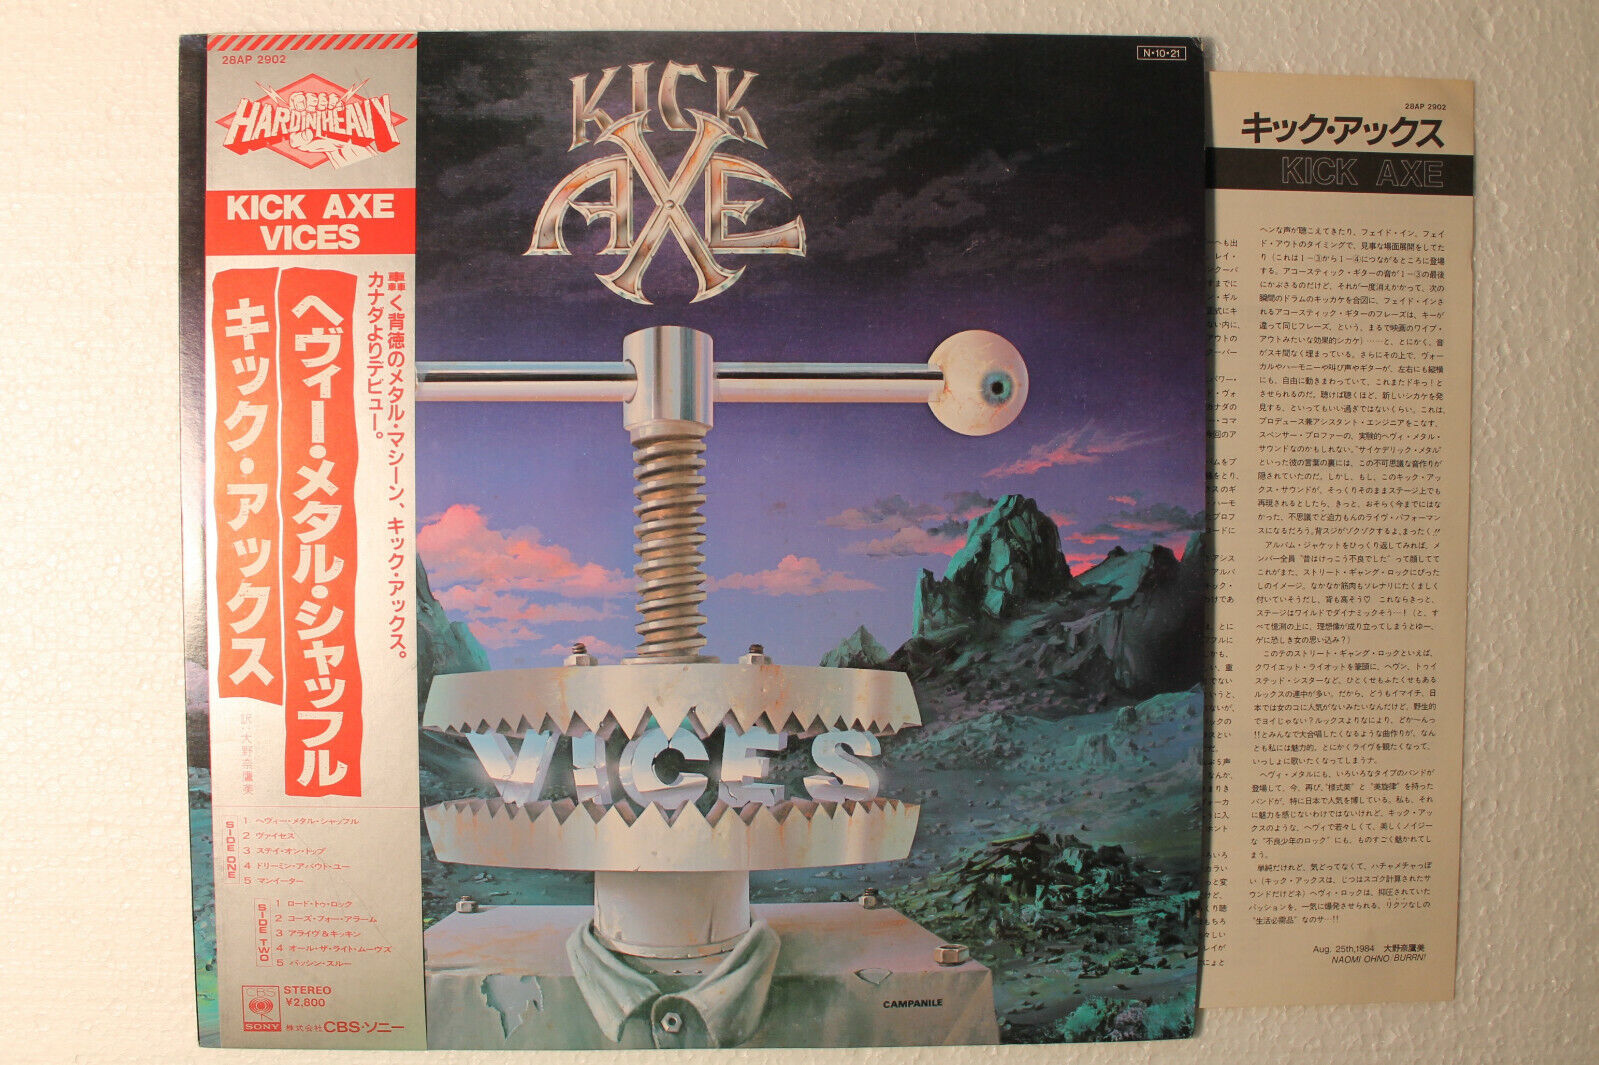 Kick Axe - Vices Japanese orig' CBS/Sony LP obi 1984 heavy metal hard rock